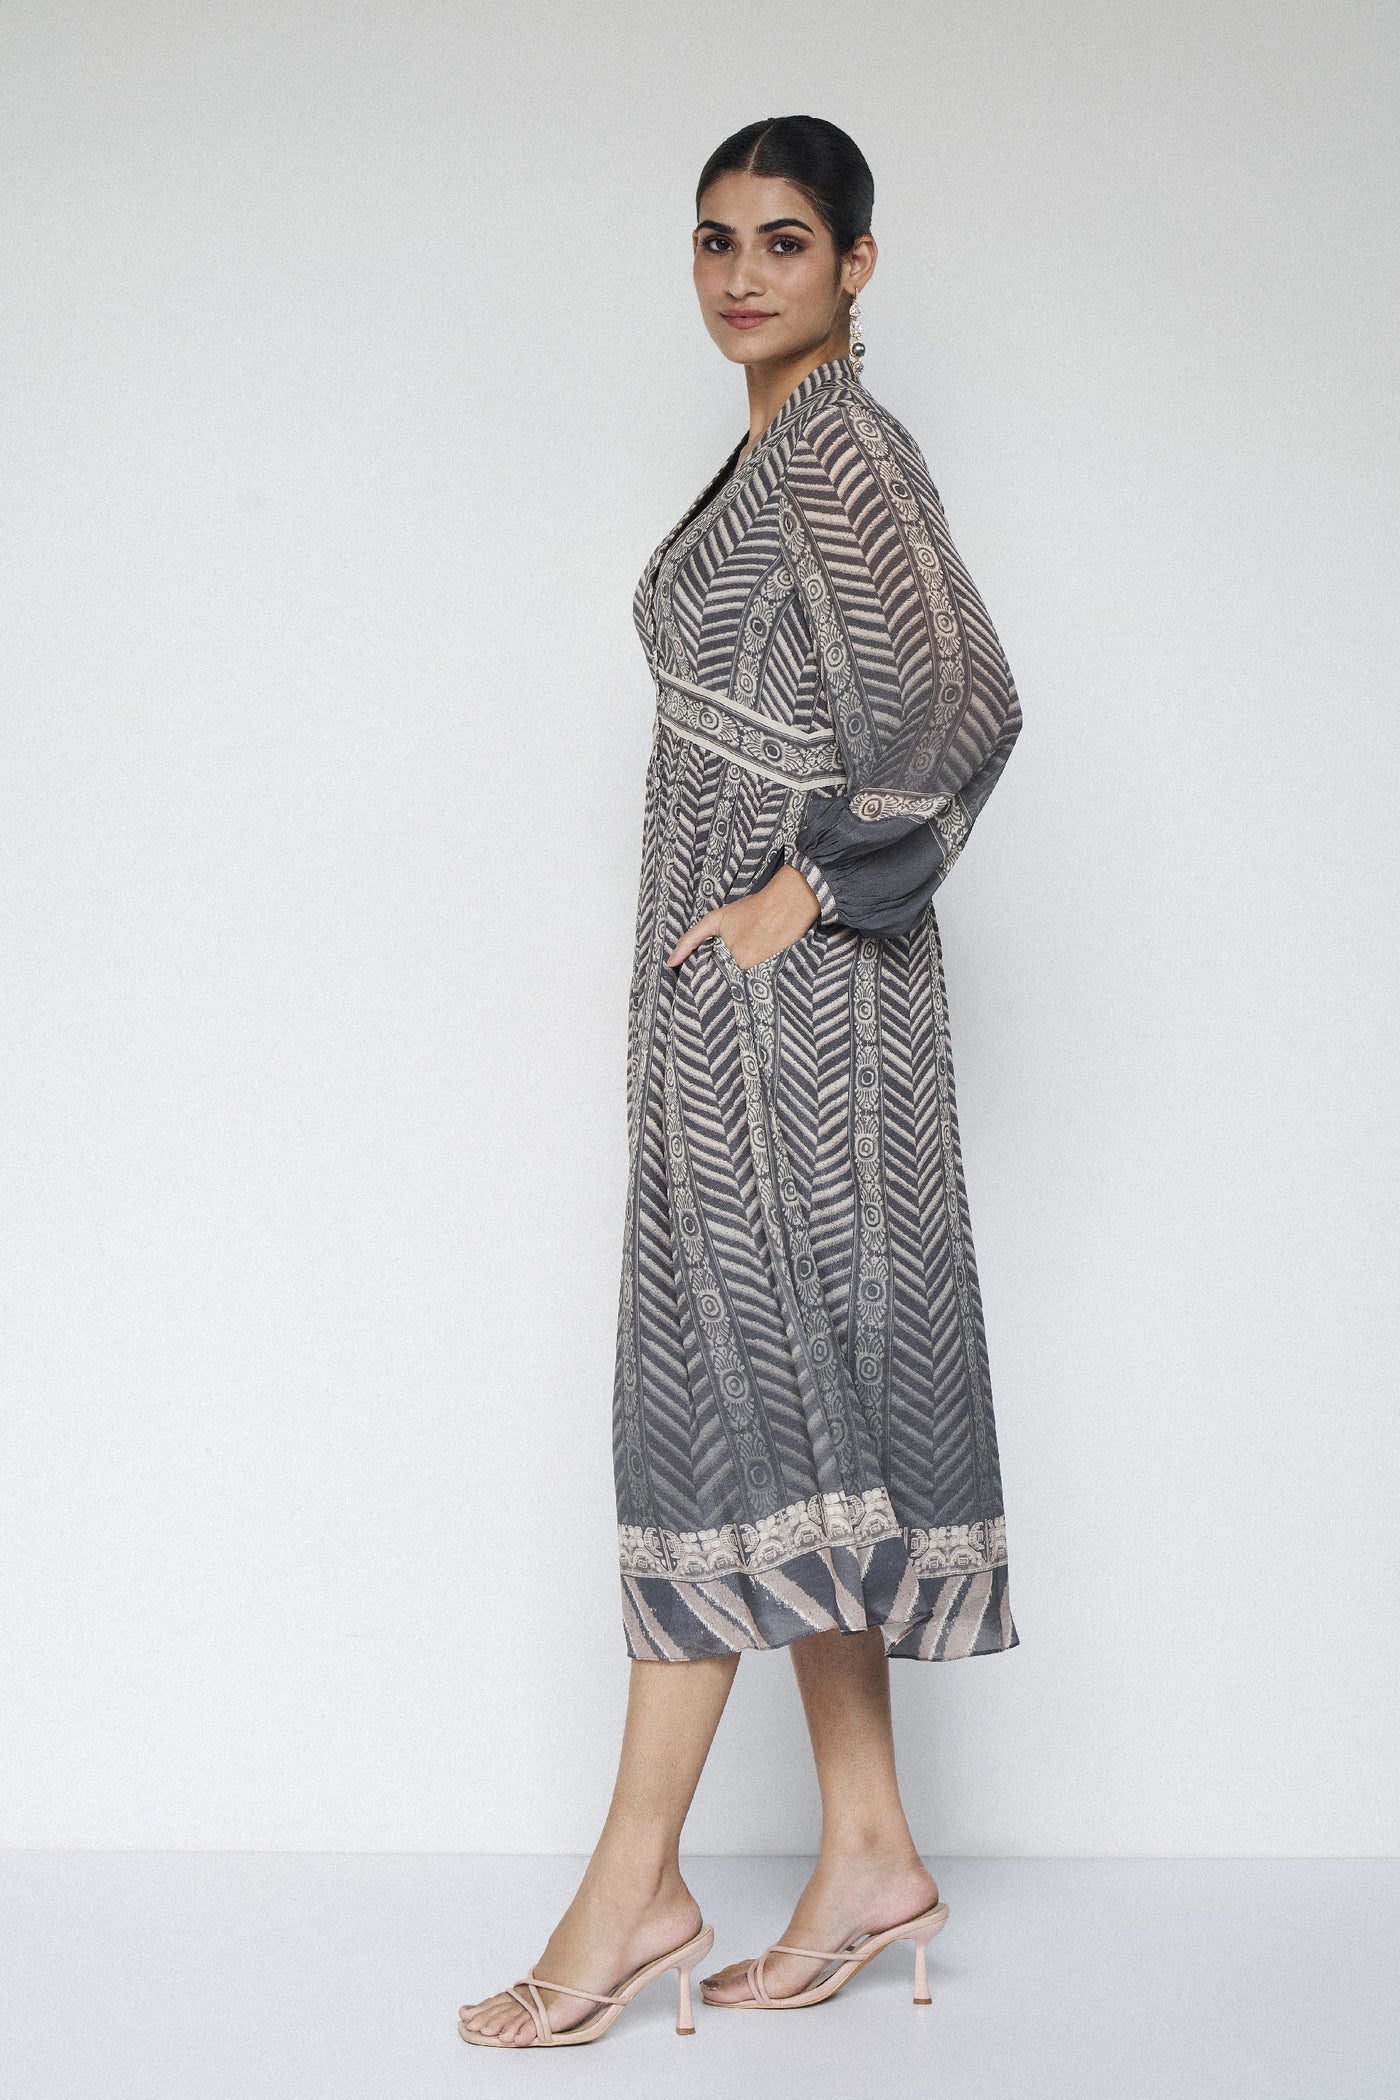 Anita Dongre Johanna Dress Grey indian designer wear online shopping melange singapore